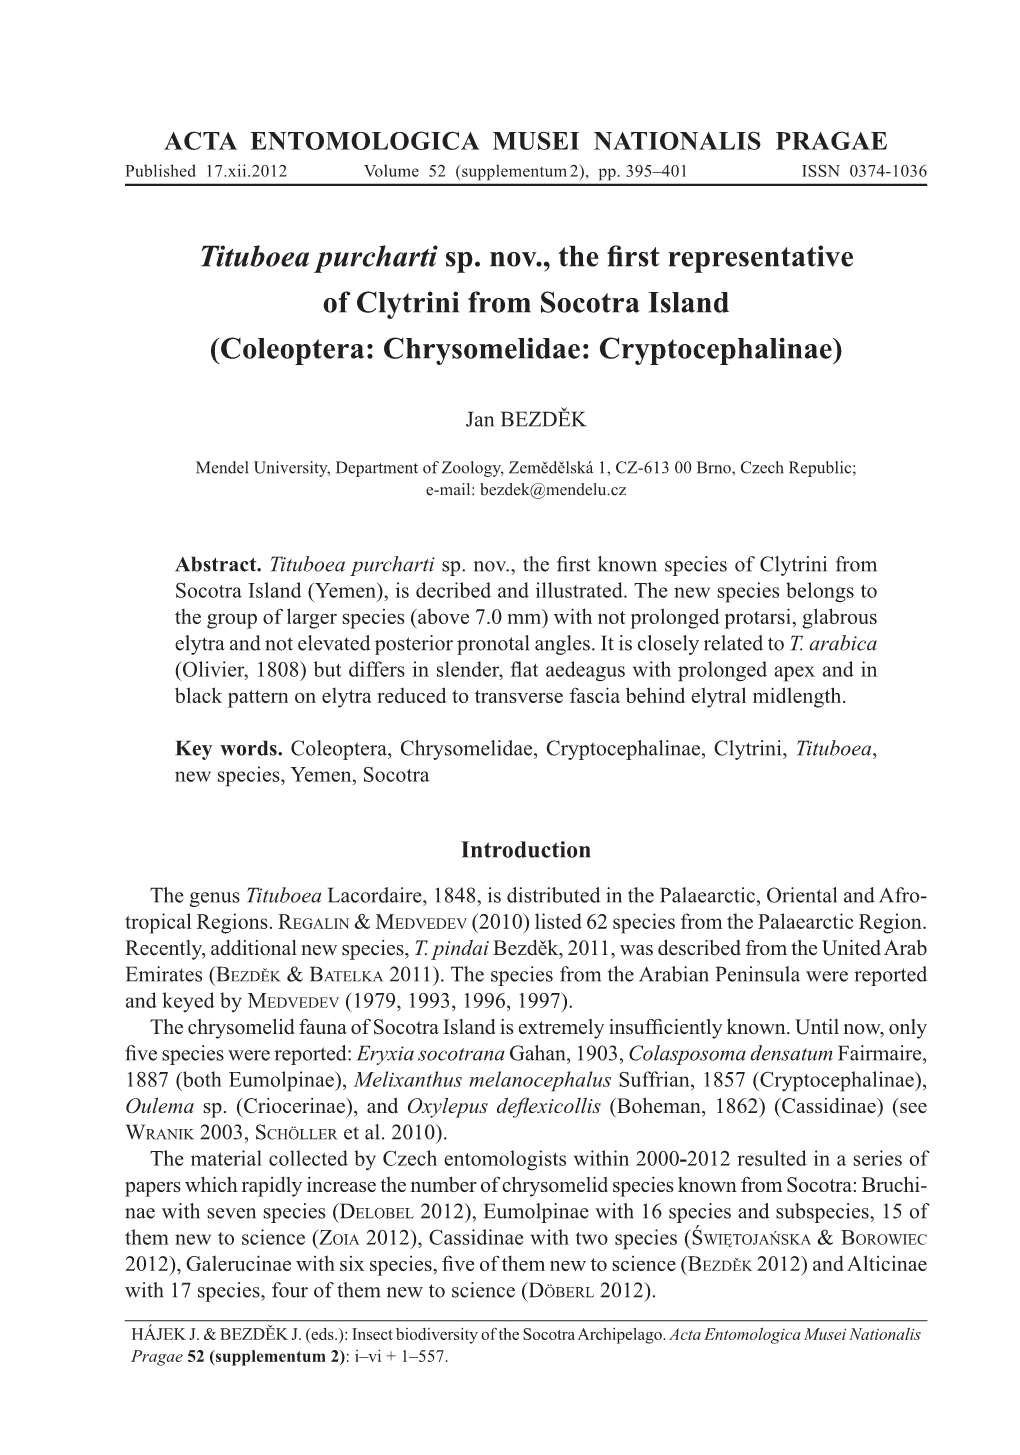 Tituboea Purcharti Sp. Nov., the First Representative of Clytrini from Socotra Island (Coleoptera: Chrysomelidae: Cryptocephalin